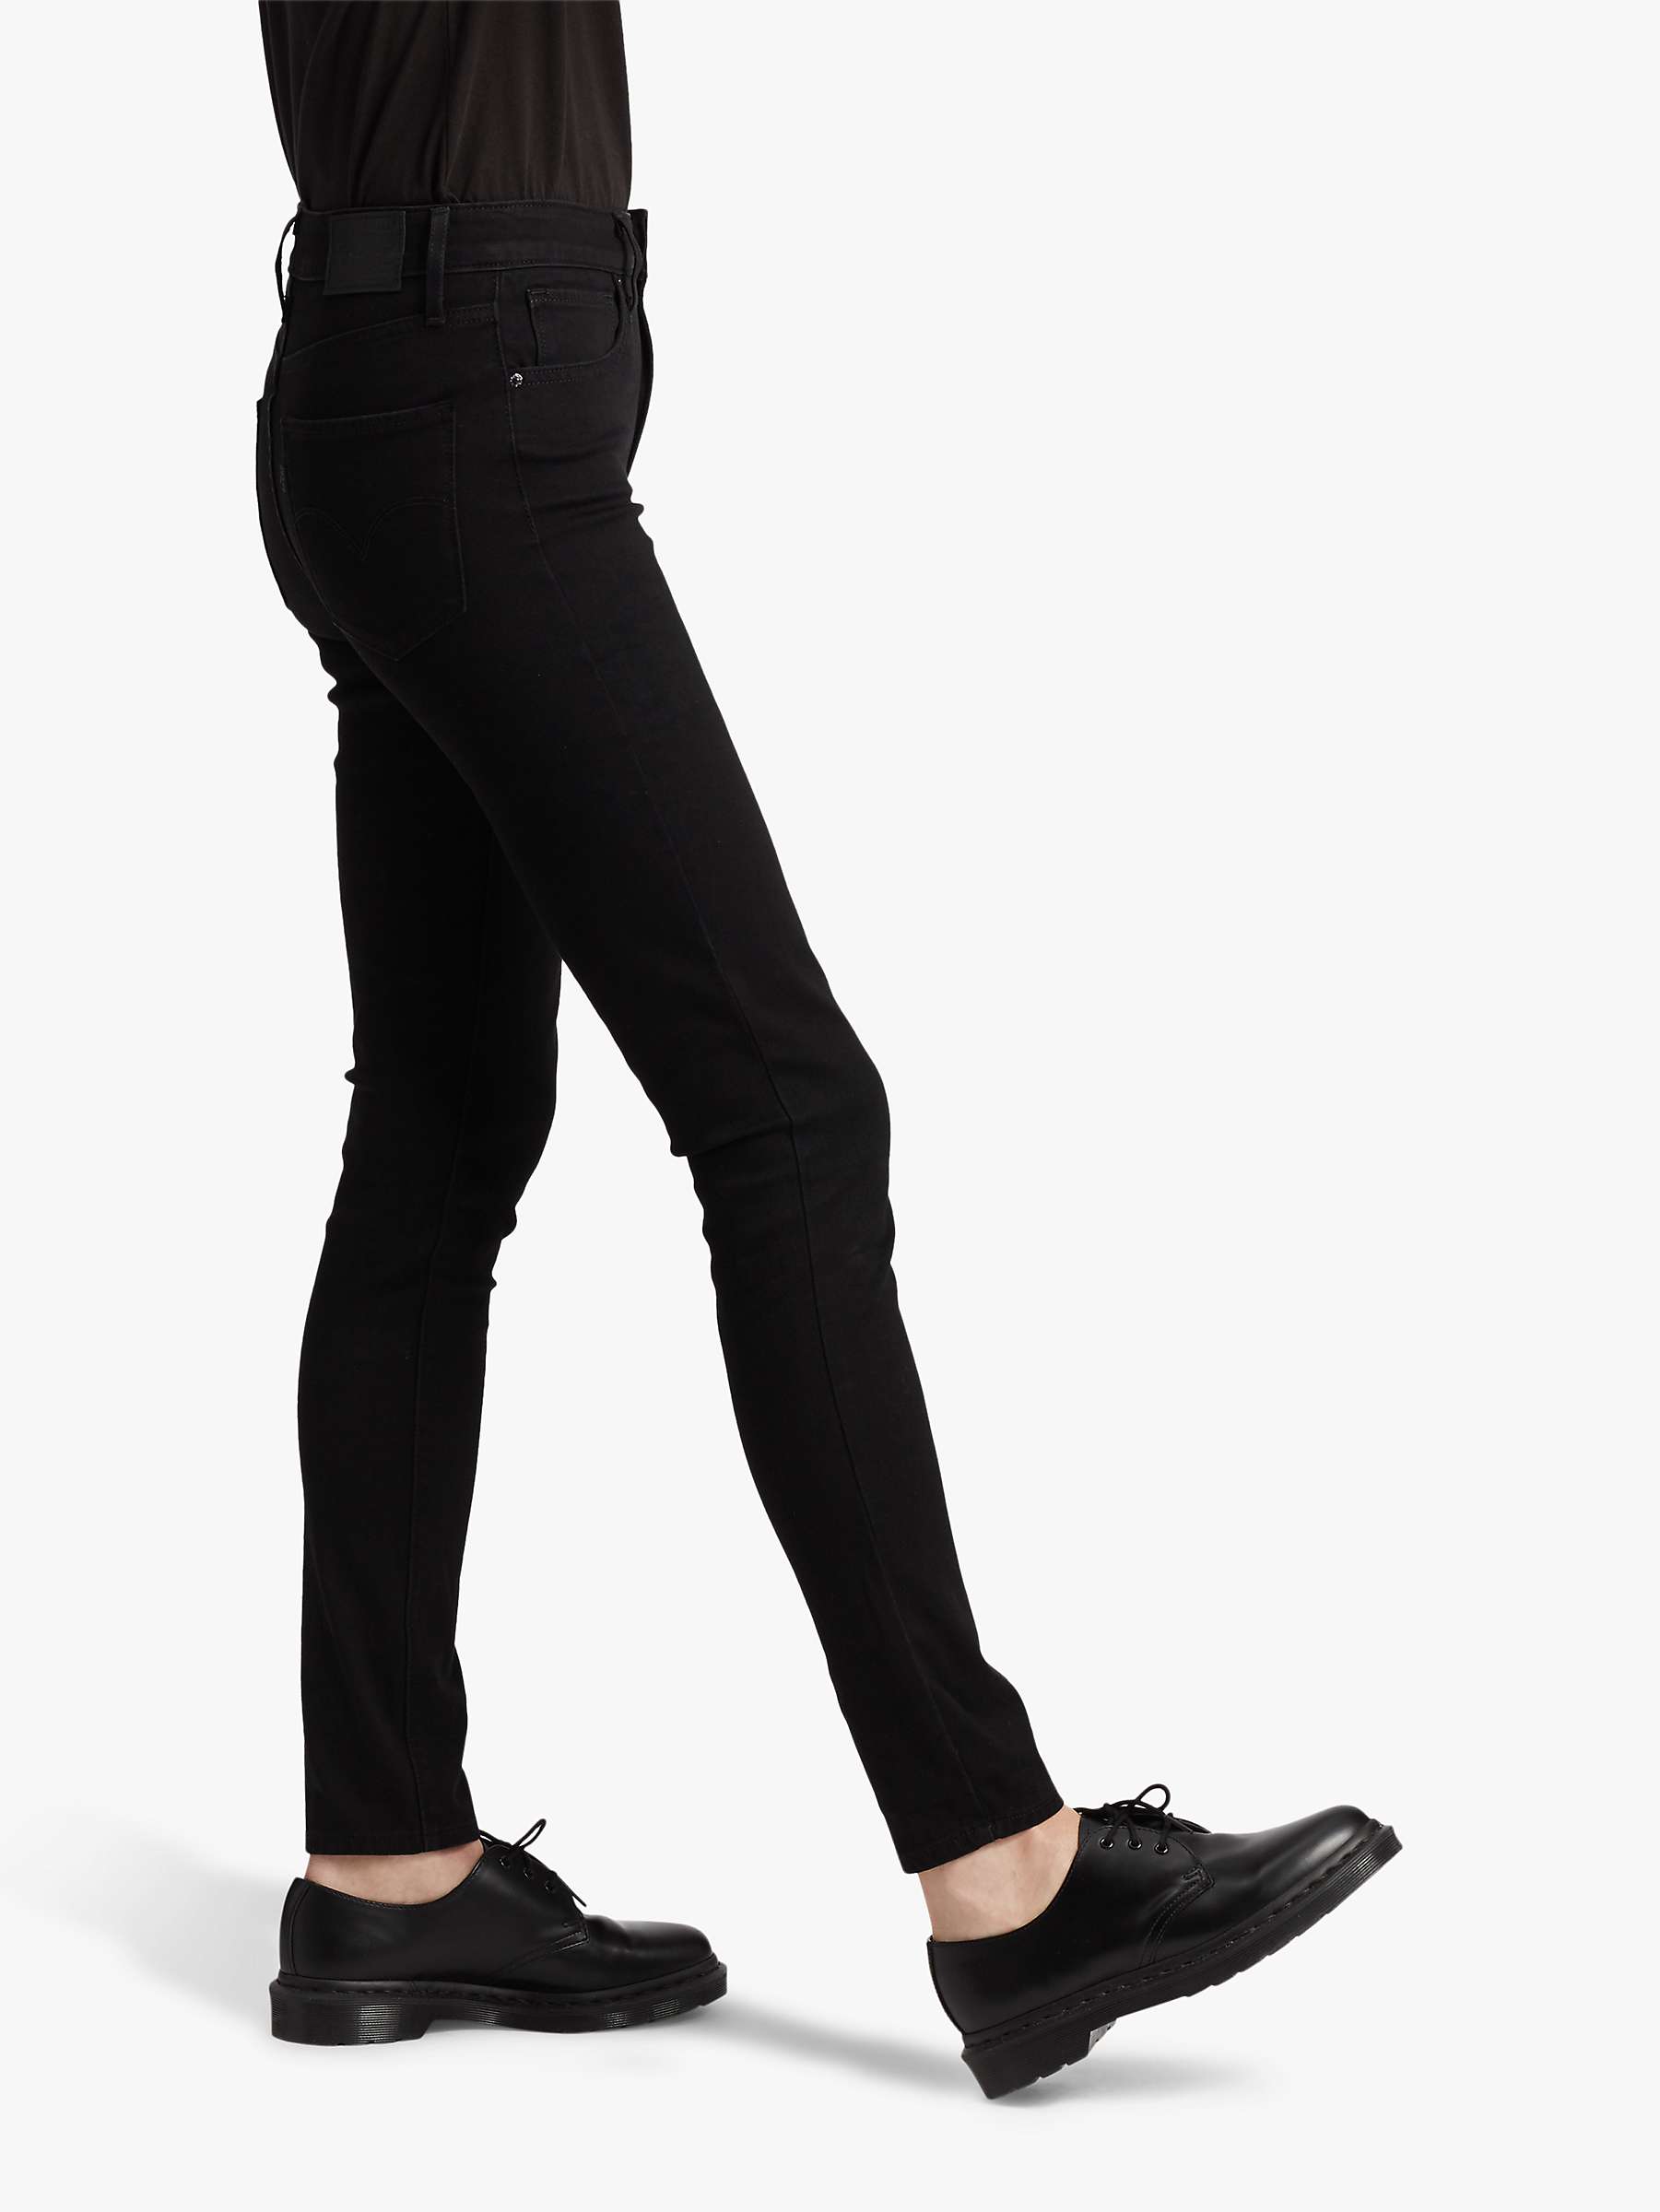 Buy Levi's 721 High Rise Skinny Jeans, Black Online at johnlewis.com